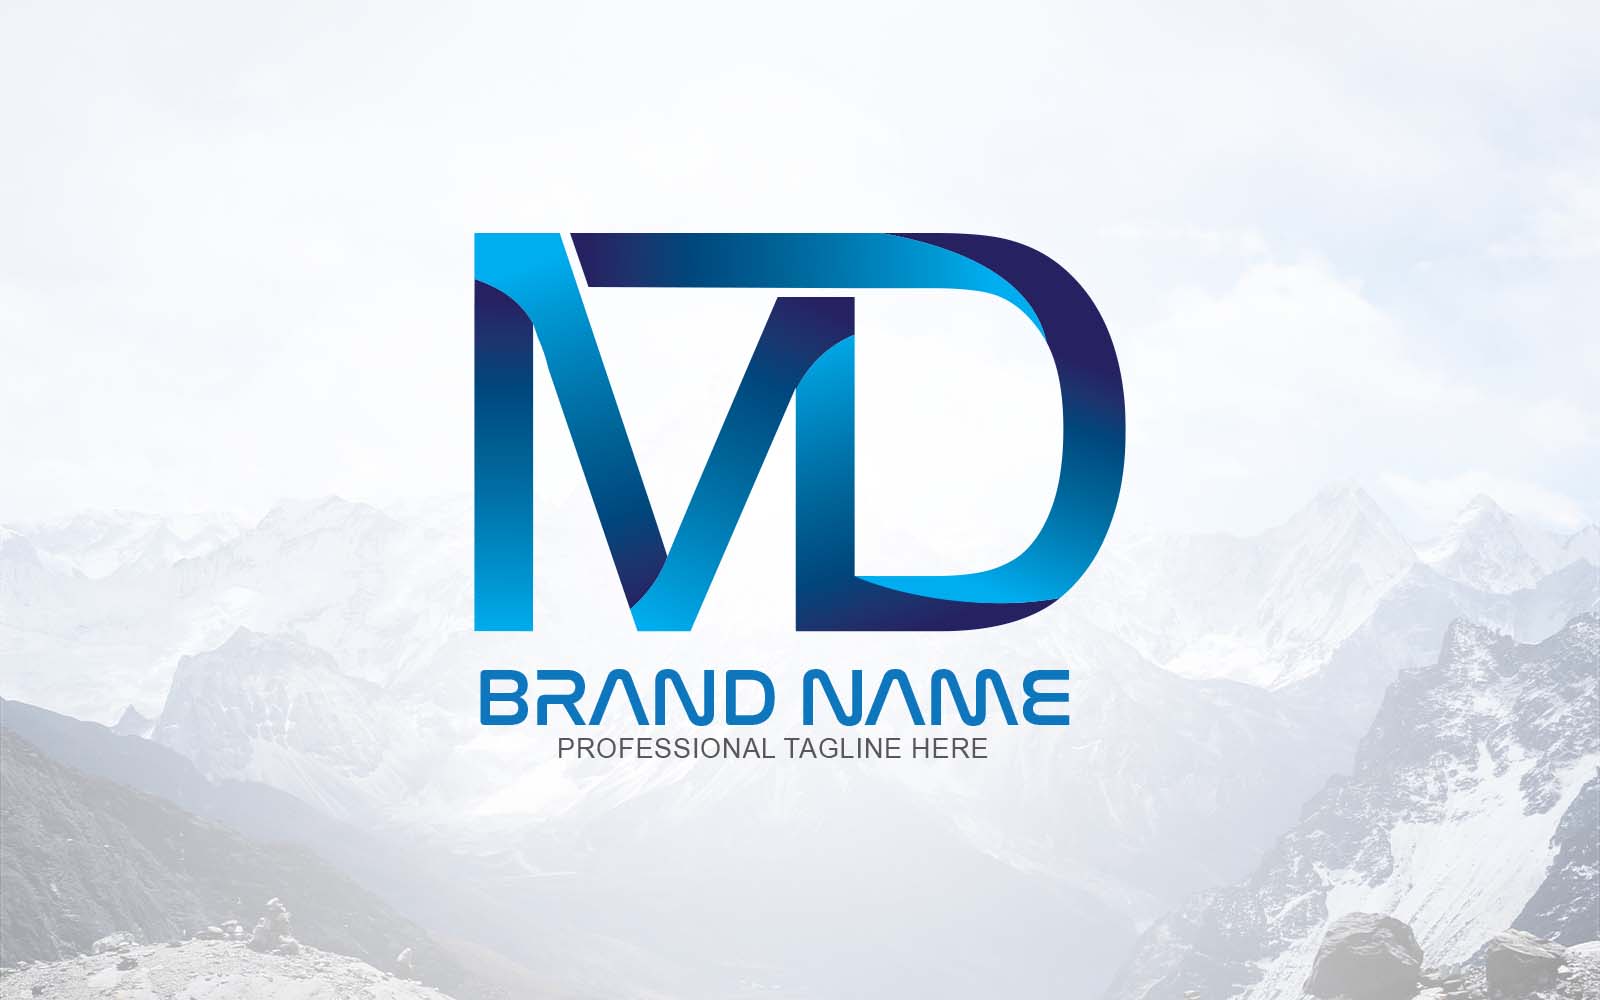 New Creative Letter MD Logo Design - Brand